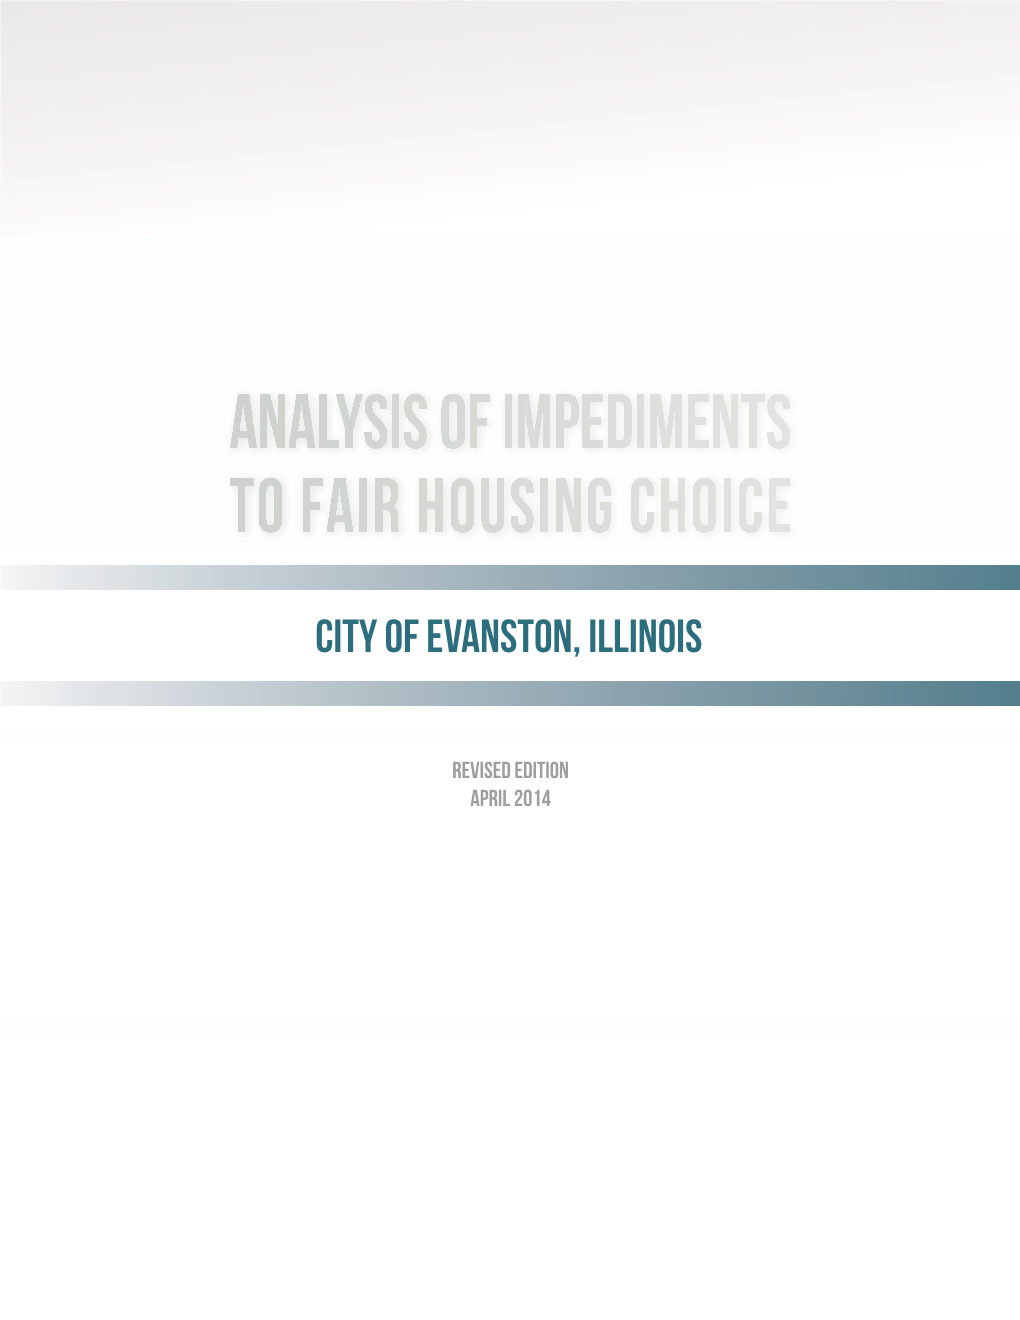 Analysis of Impediment to Fair Housing Choice